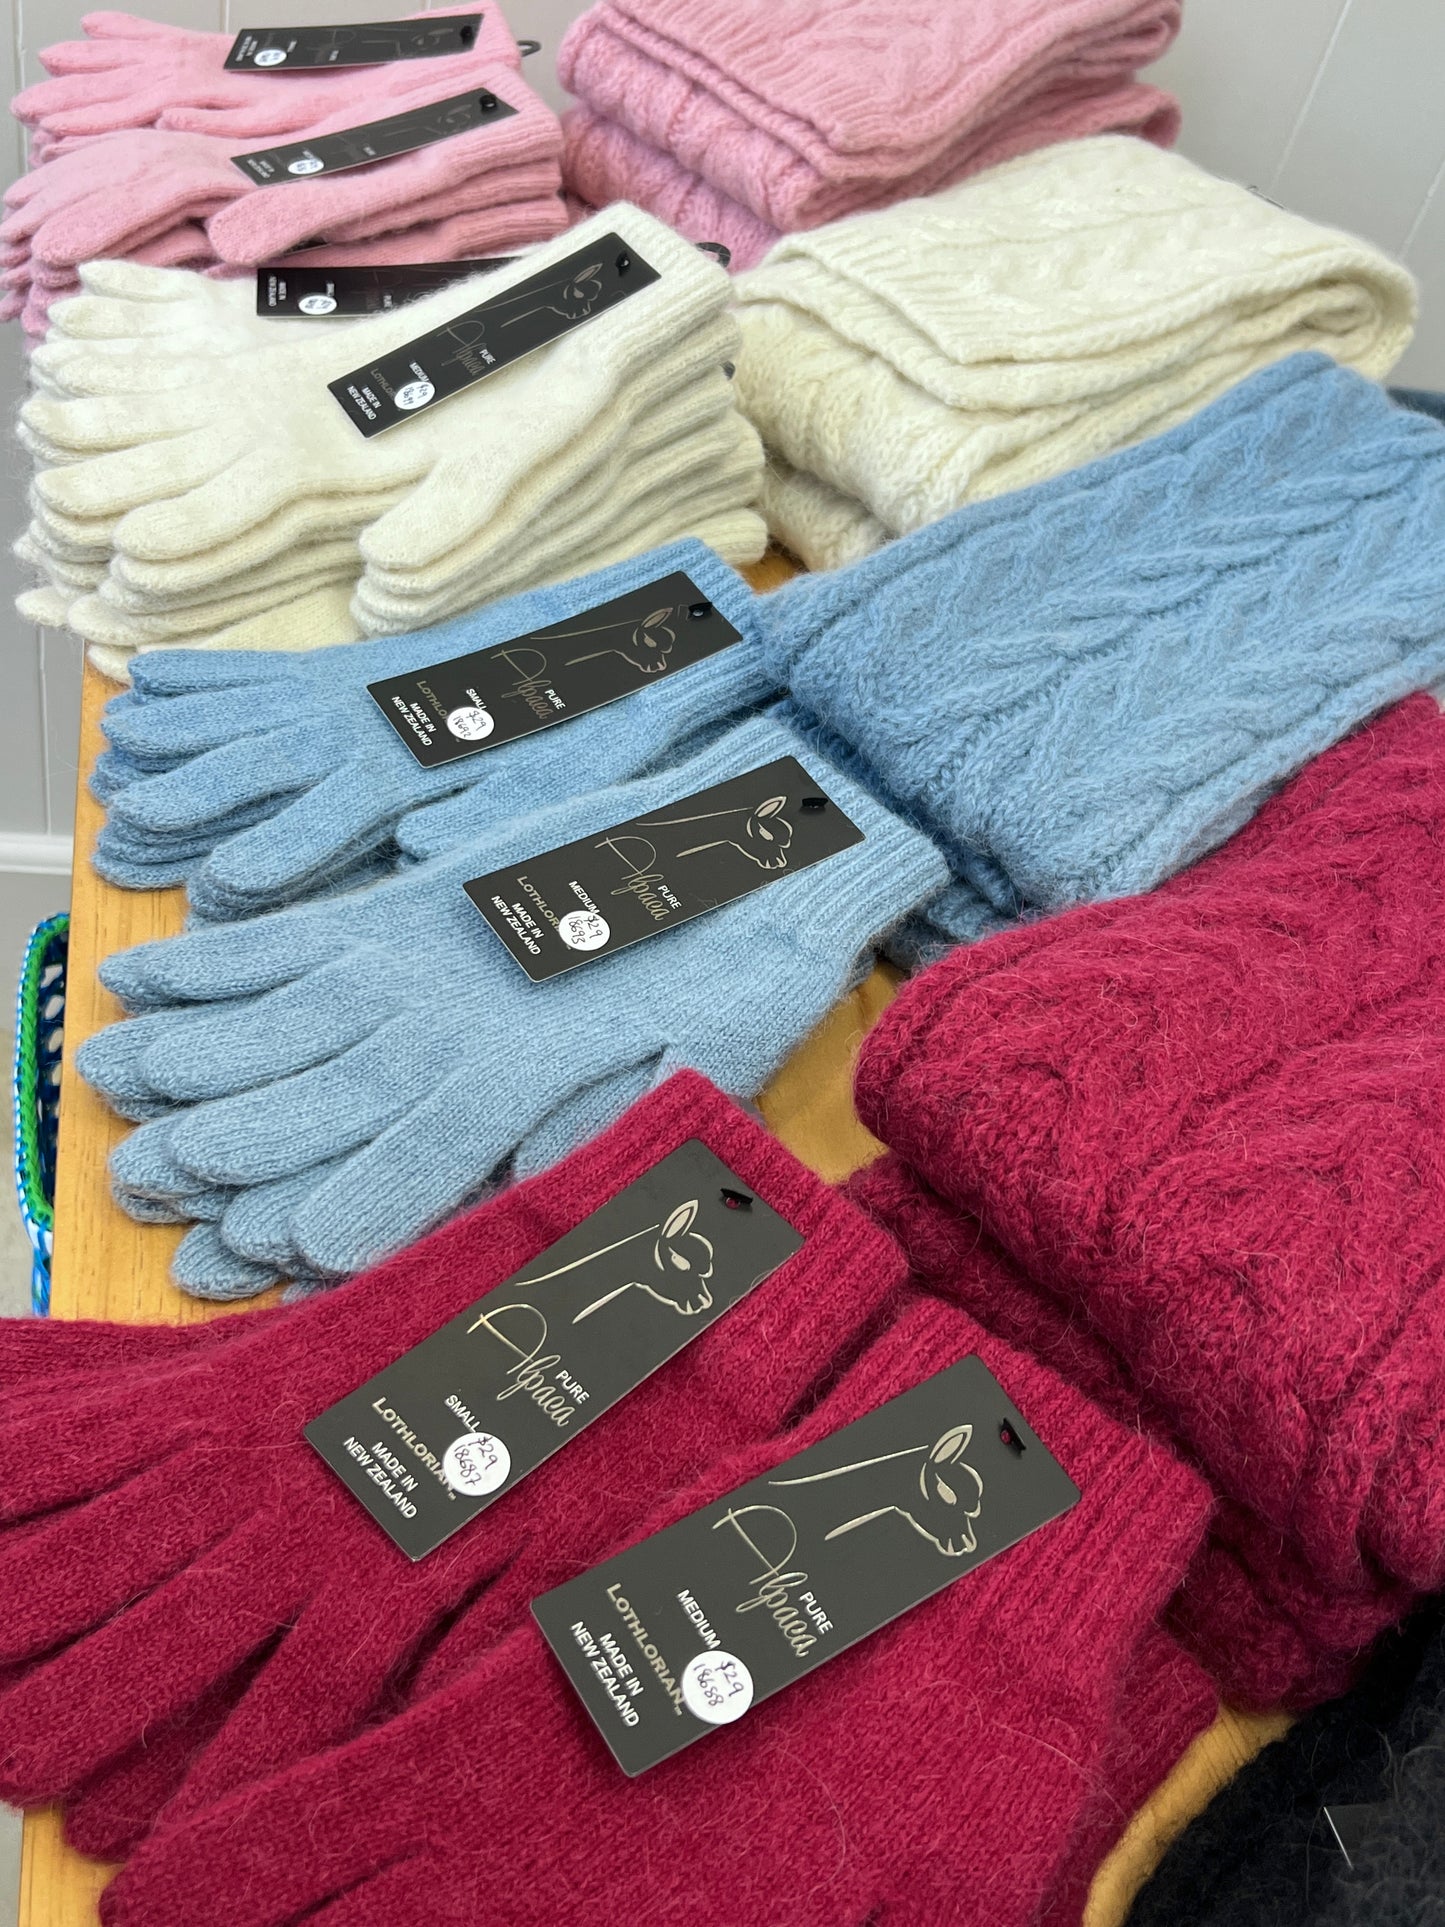 Alpaca Wool Gloves - Mist